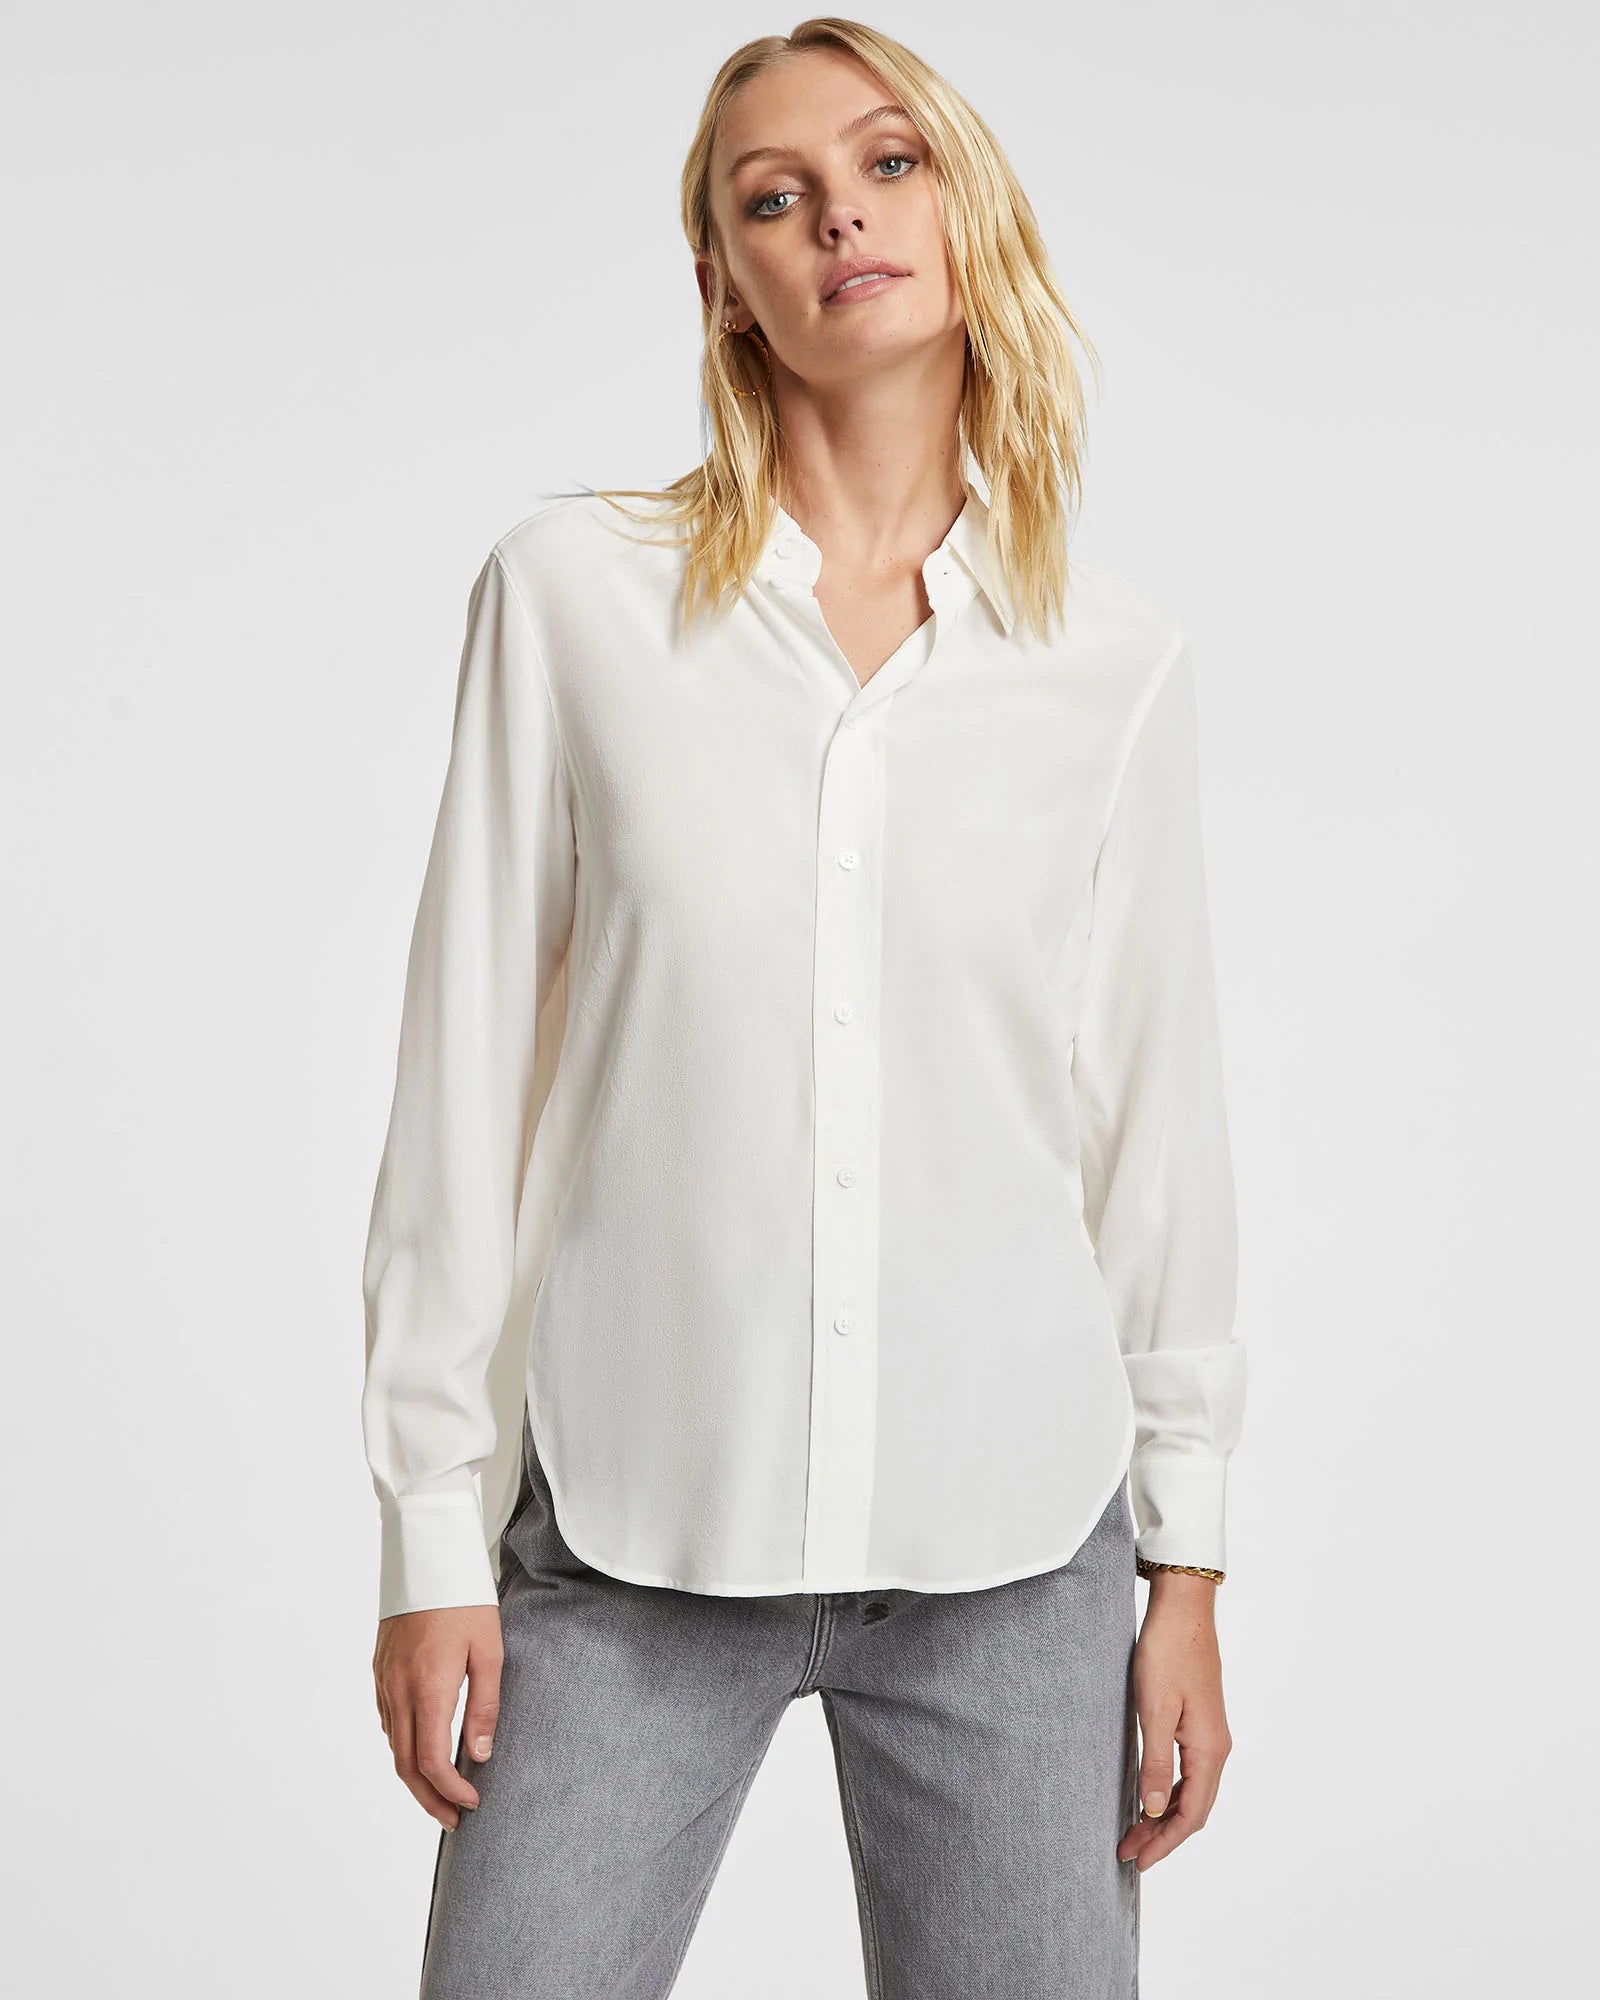 Xzibit white shirt